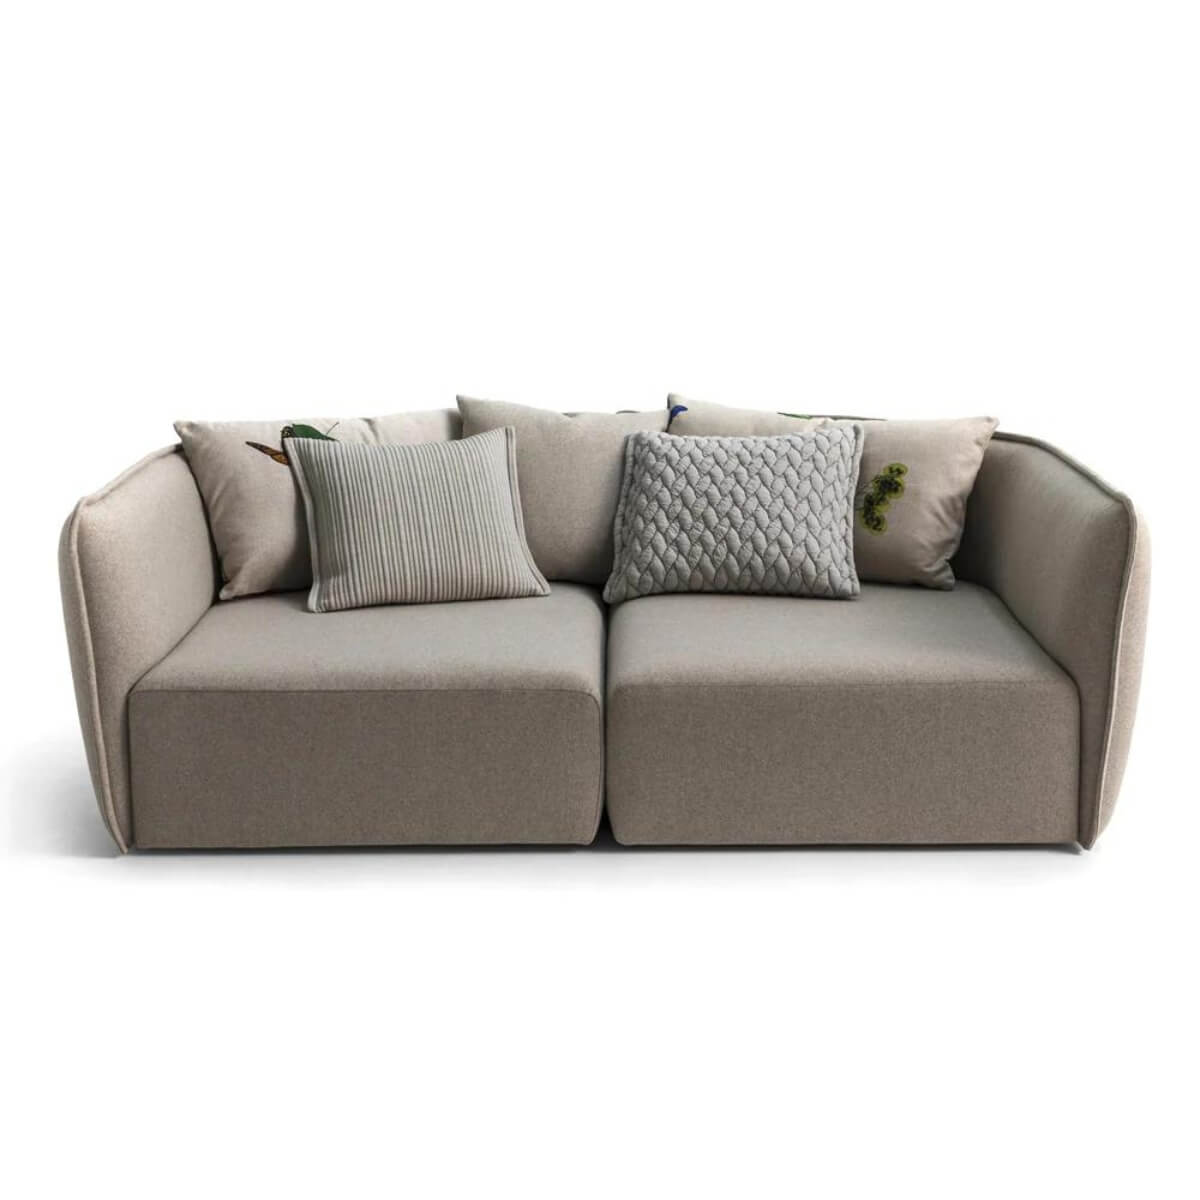 Astral Arc Cotton Linen Sofa - A Cosmic Embrace